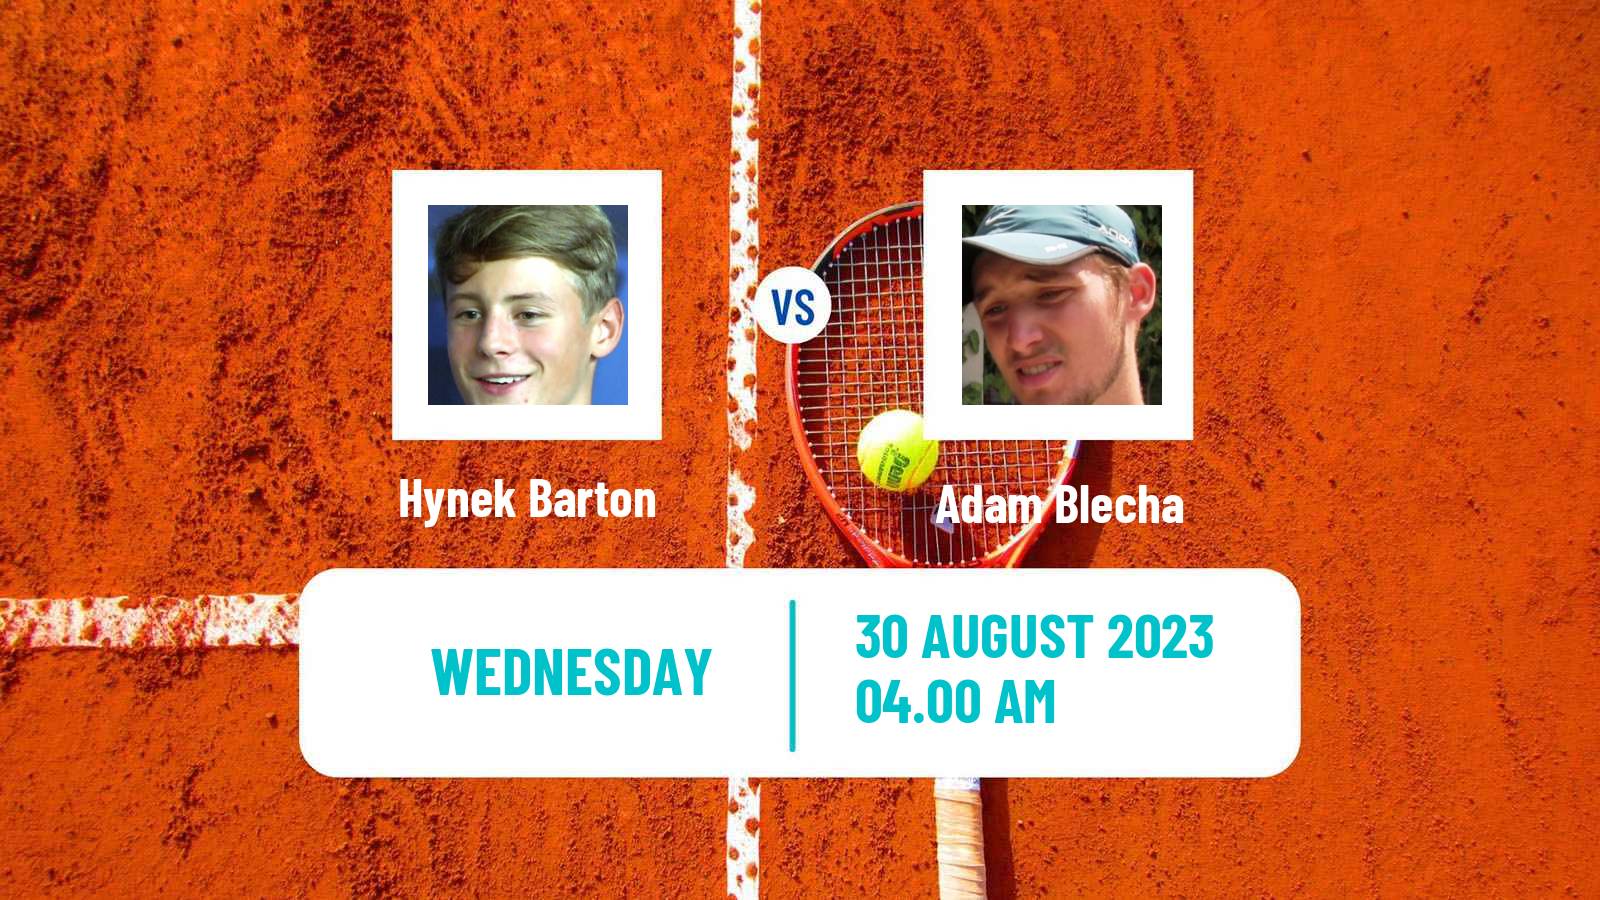 Tennis ITF M25 Jablonec Nad Nisou 2 Men Hynek Barton - Adam Blecha